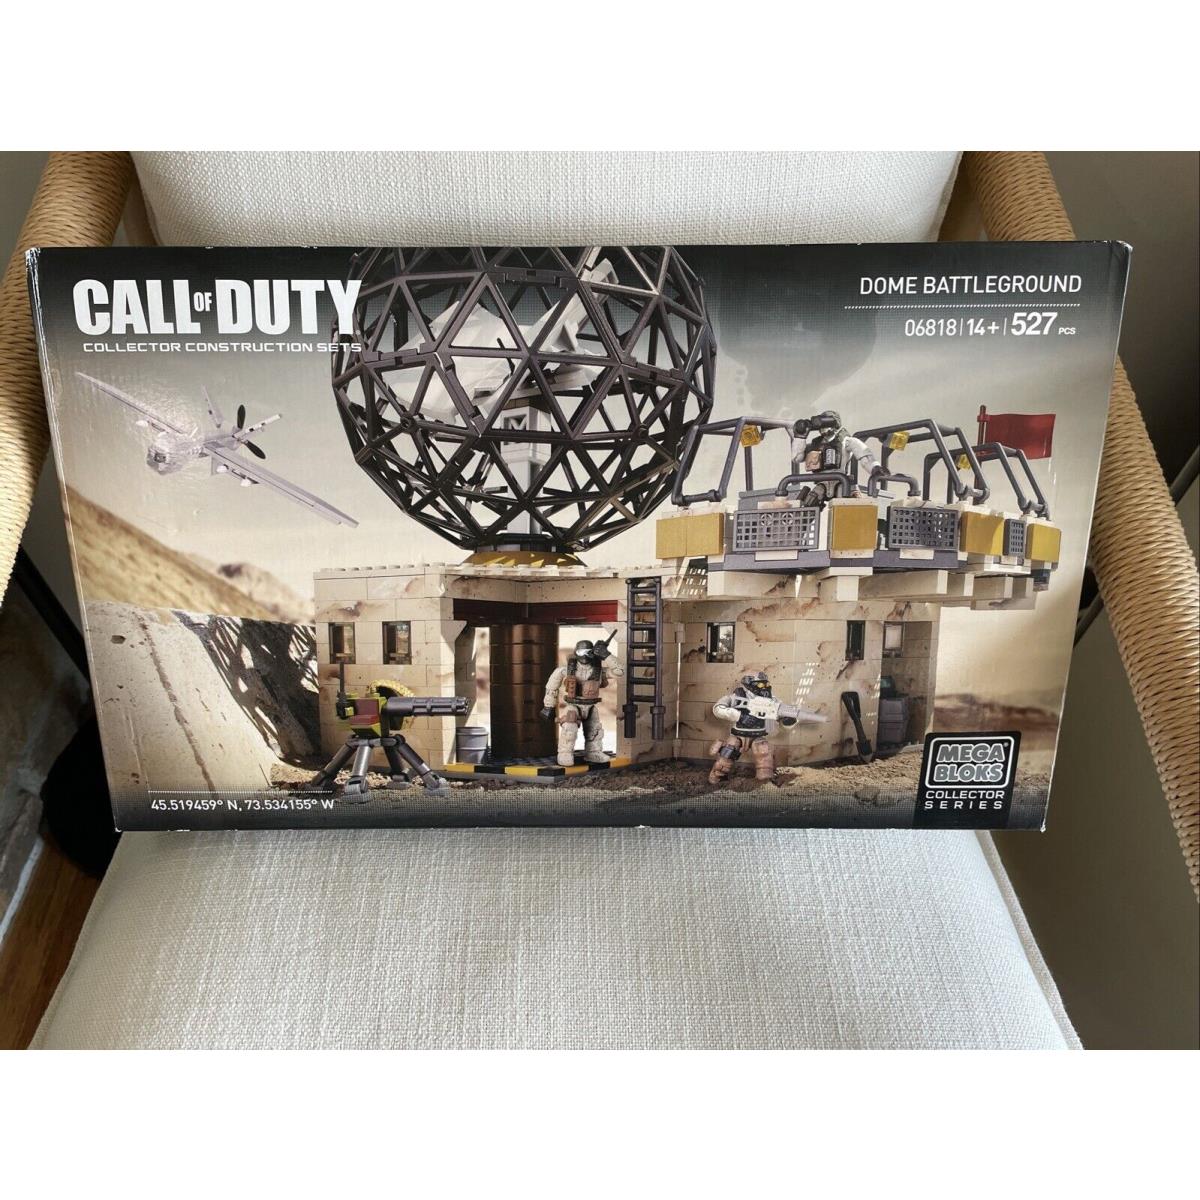 2013 Mega Bloks Collector Series Call Of Duty Dome Battleground Set 06818